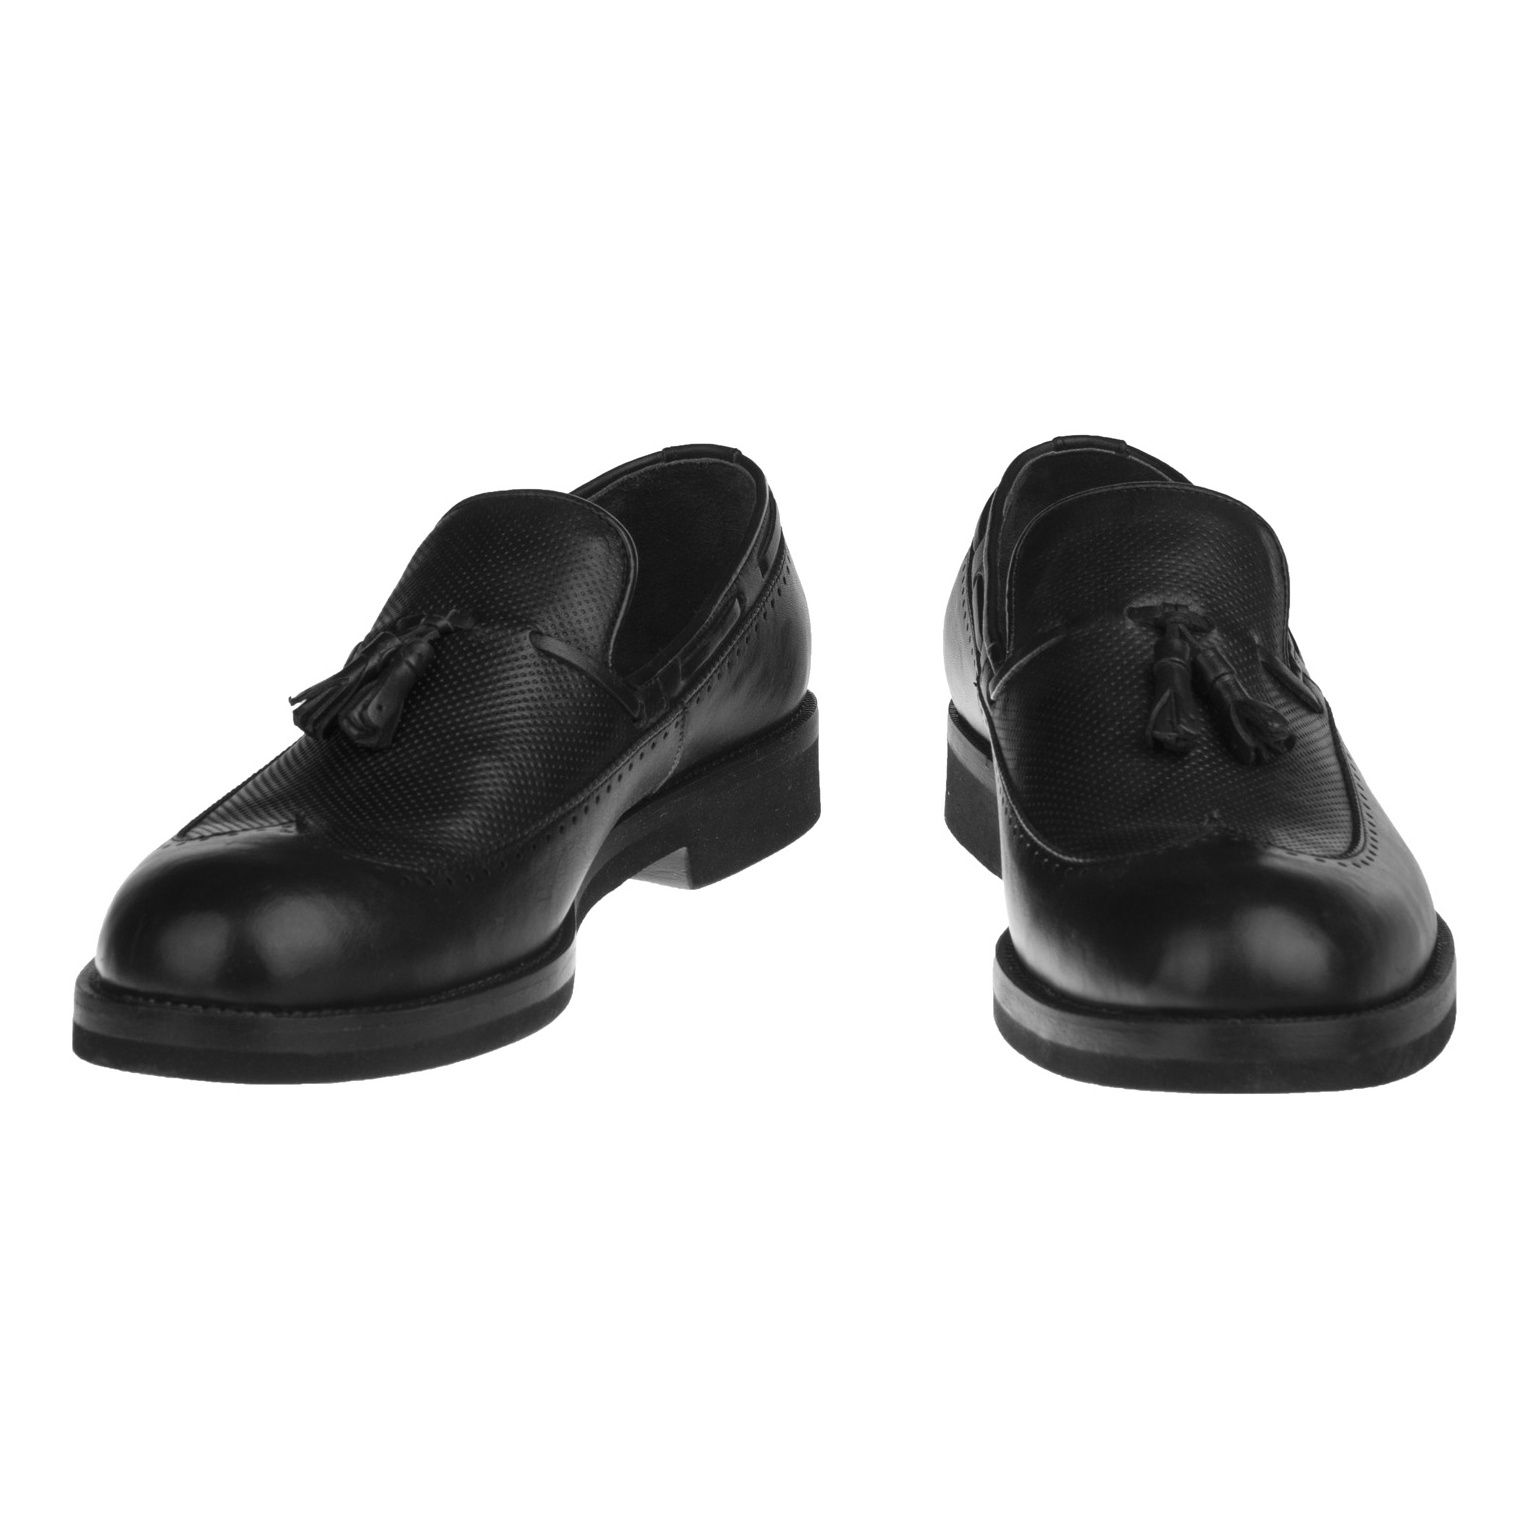 کفش مردانه بلوط مدل 7184A503-101 - مشکی - 4